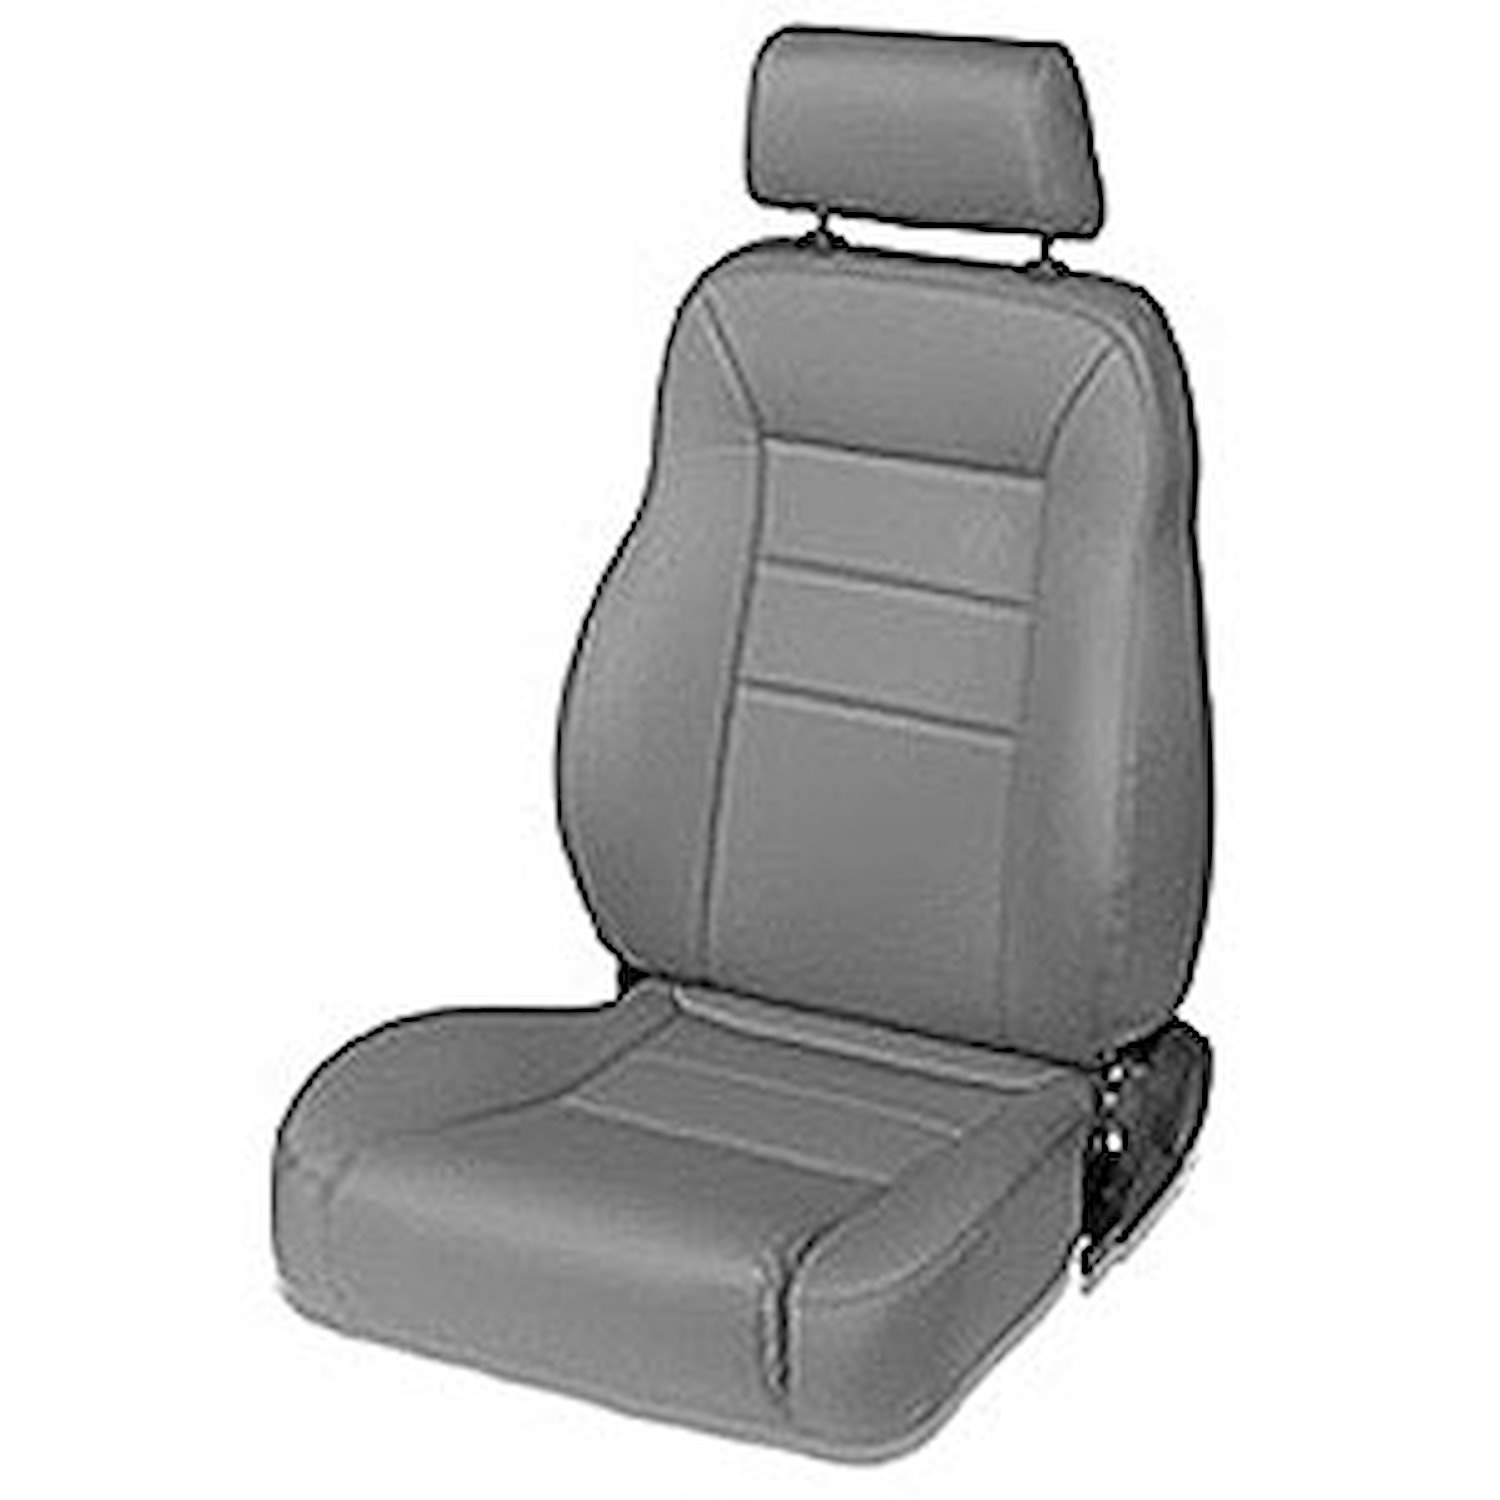 Trailmax II Pro Seat, Charcoal, Front, High-Back, Vinyl, Premium Bucket, Driver side,